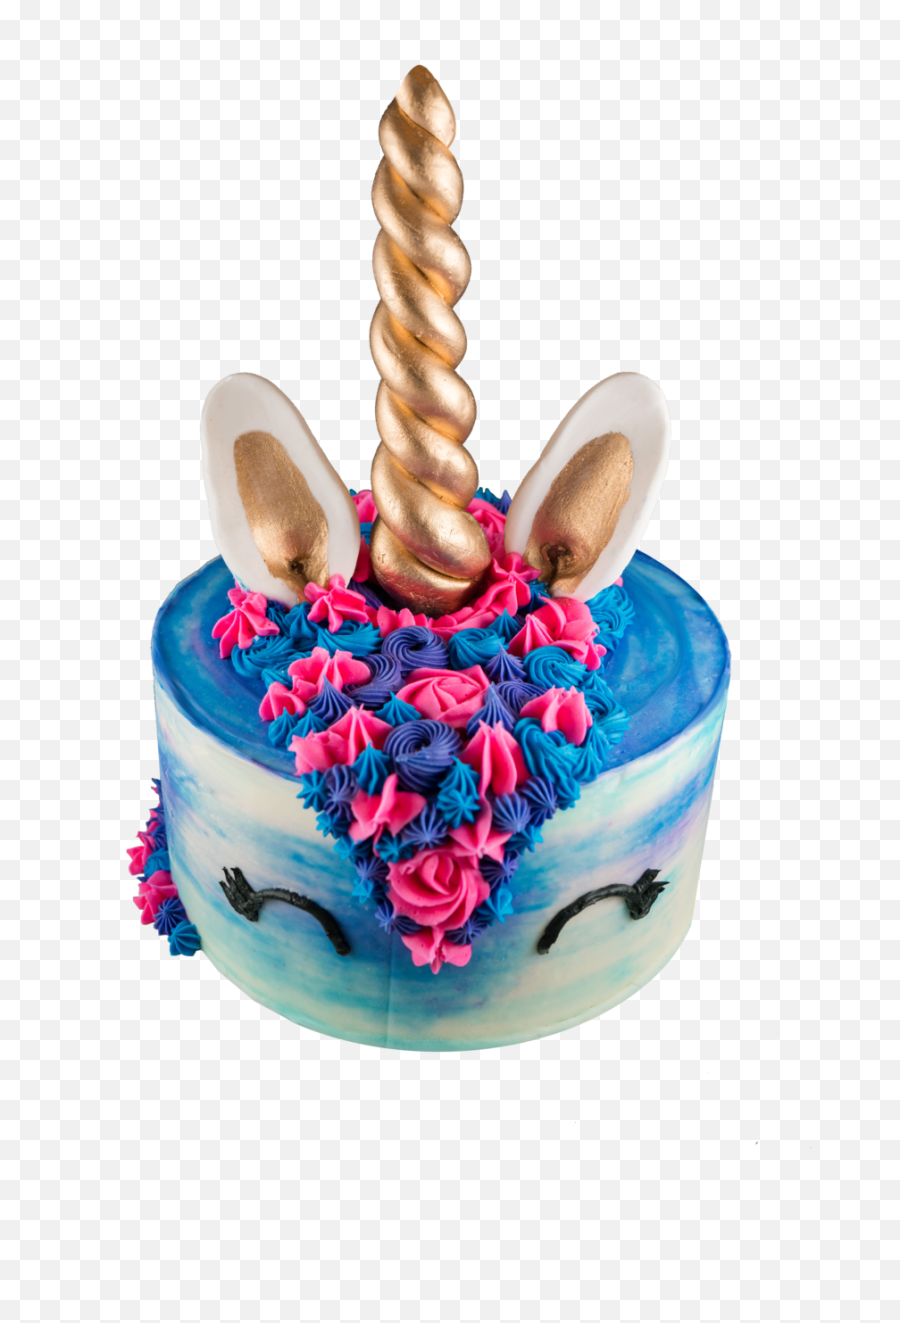 Download Unicorn Cake Png Image With No Background - Pngkeycom Birthday Cake,Cake Transparent Background